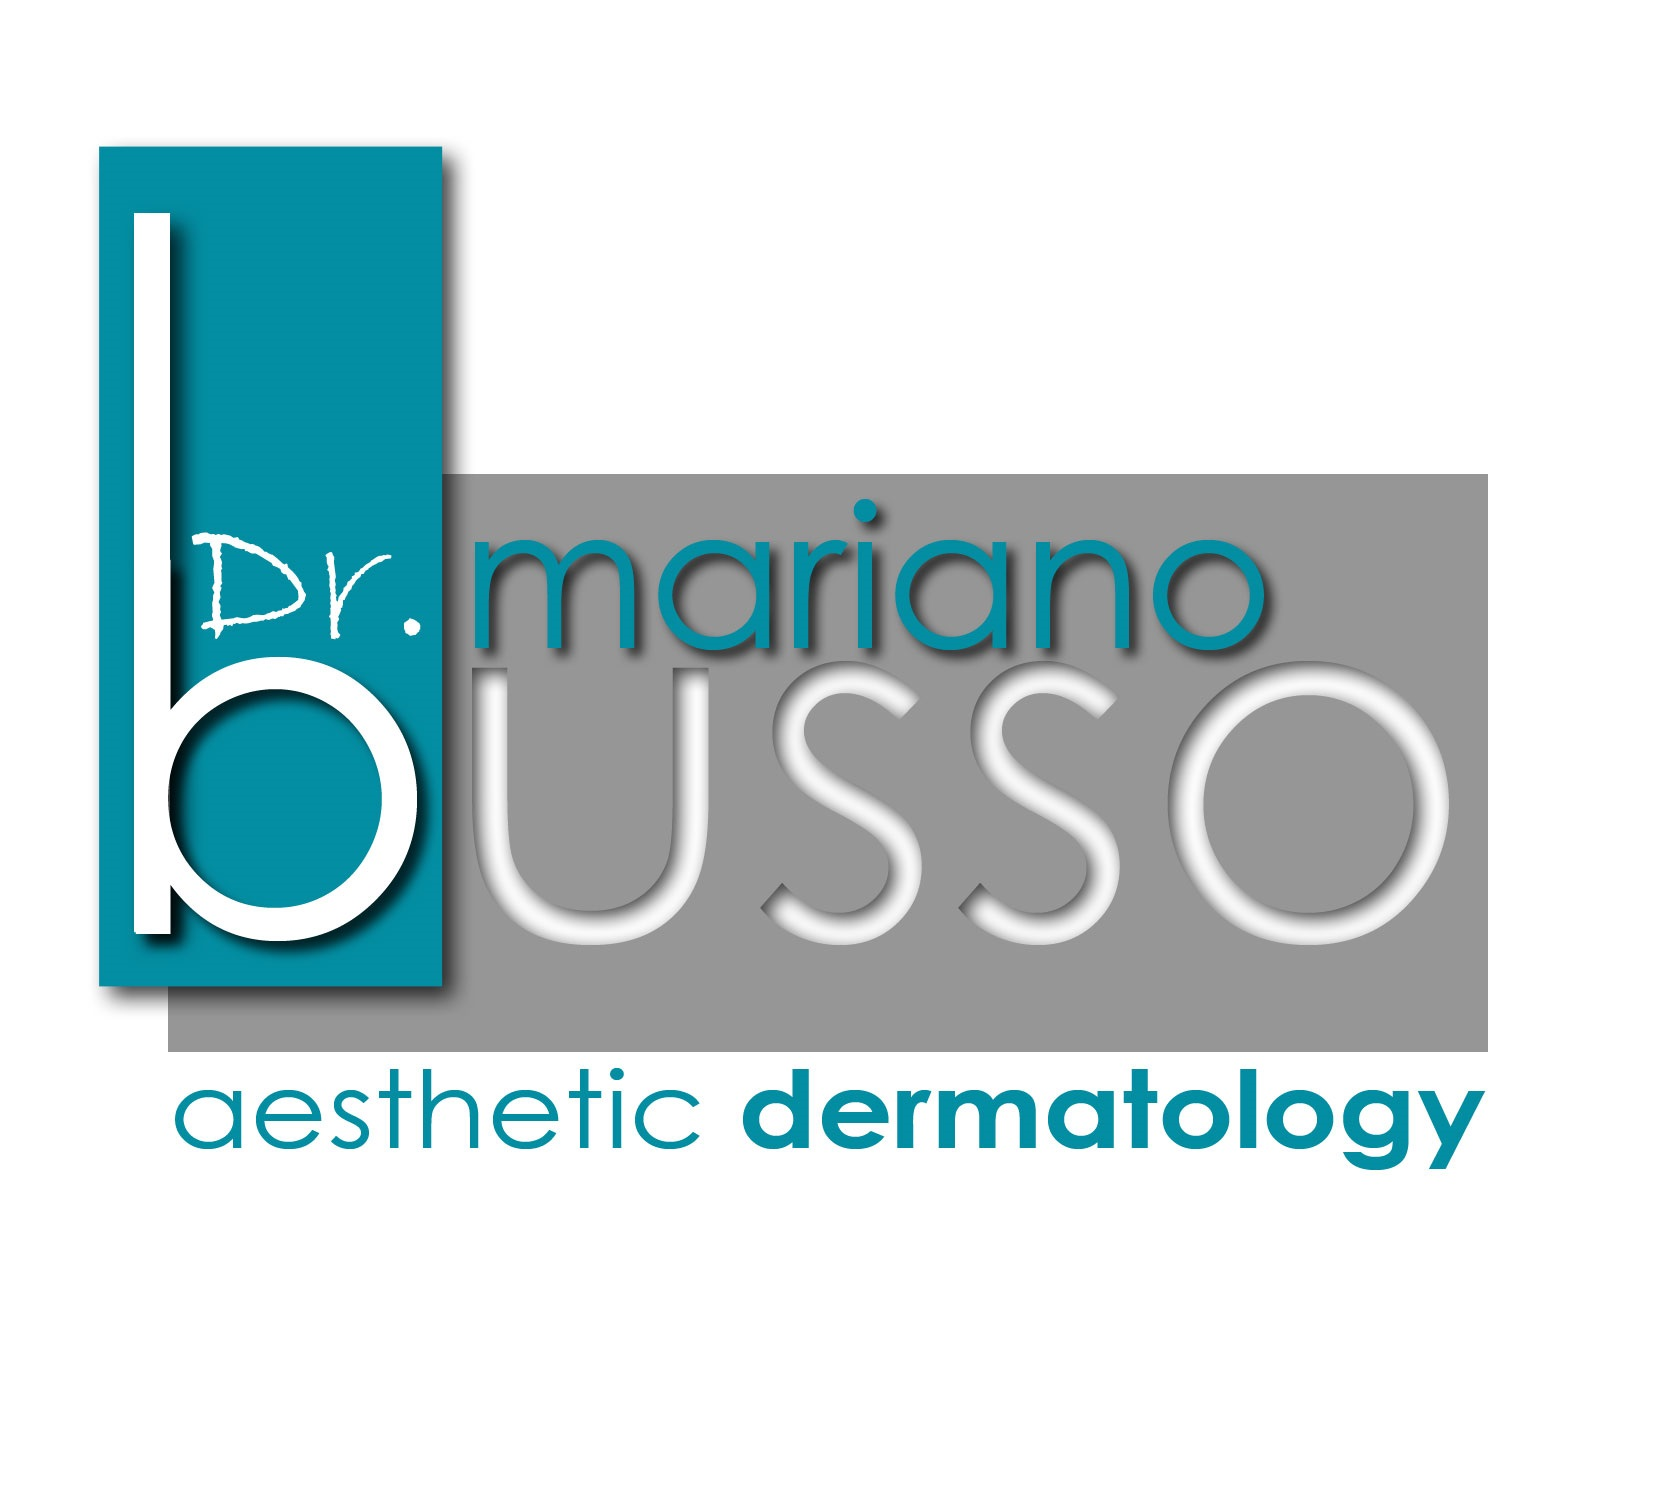 Dr. Mariano Busso Aesthetic Dermatology Logo